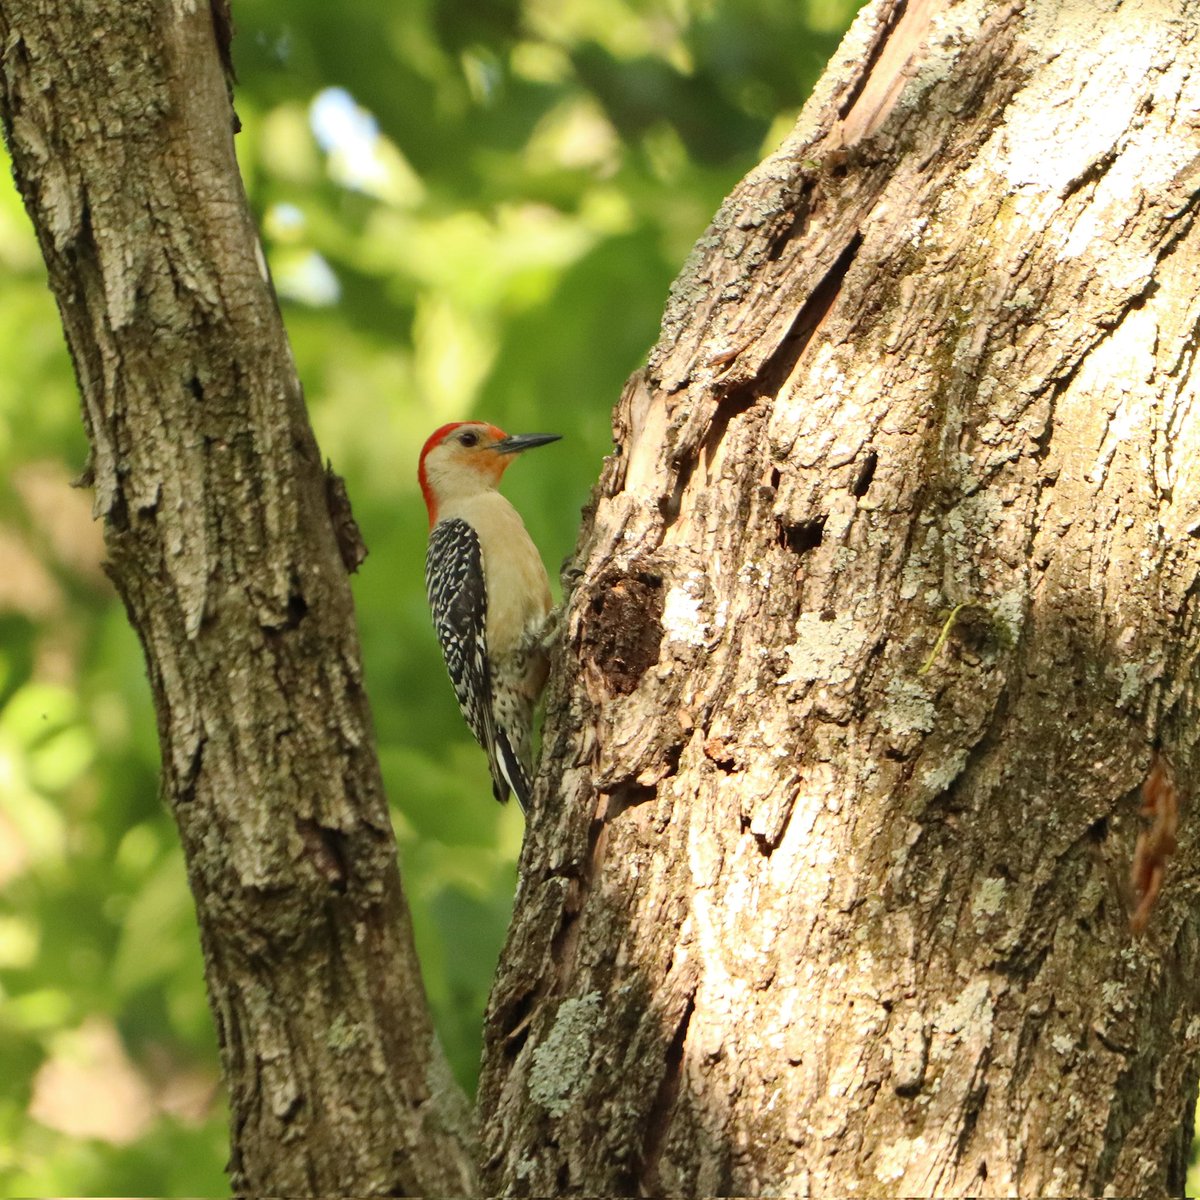 Still my favorite woodpecker! ❤️
#redbelliedwoodpecker #redbelliedwoodpeckers #woodpecker #woodpeckers #ohiobirding #beavercreekohio #beavercreekbirding #birds #beavercreek  #ohiobirdworld #ohiobirdlovers #ohiobirds